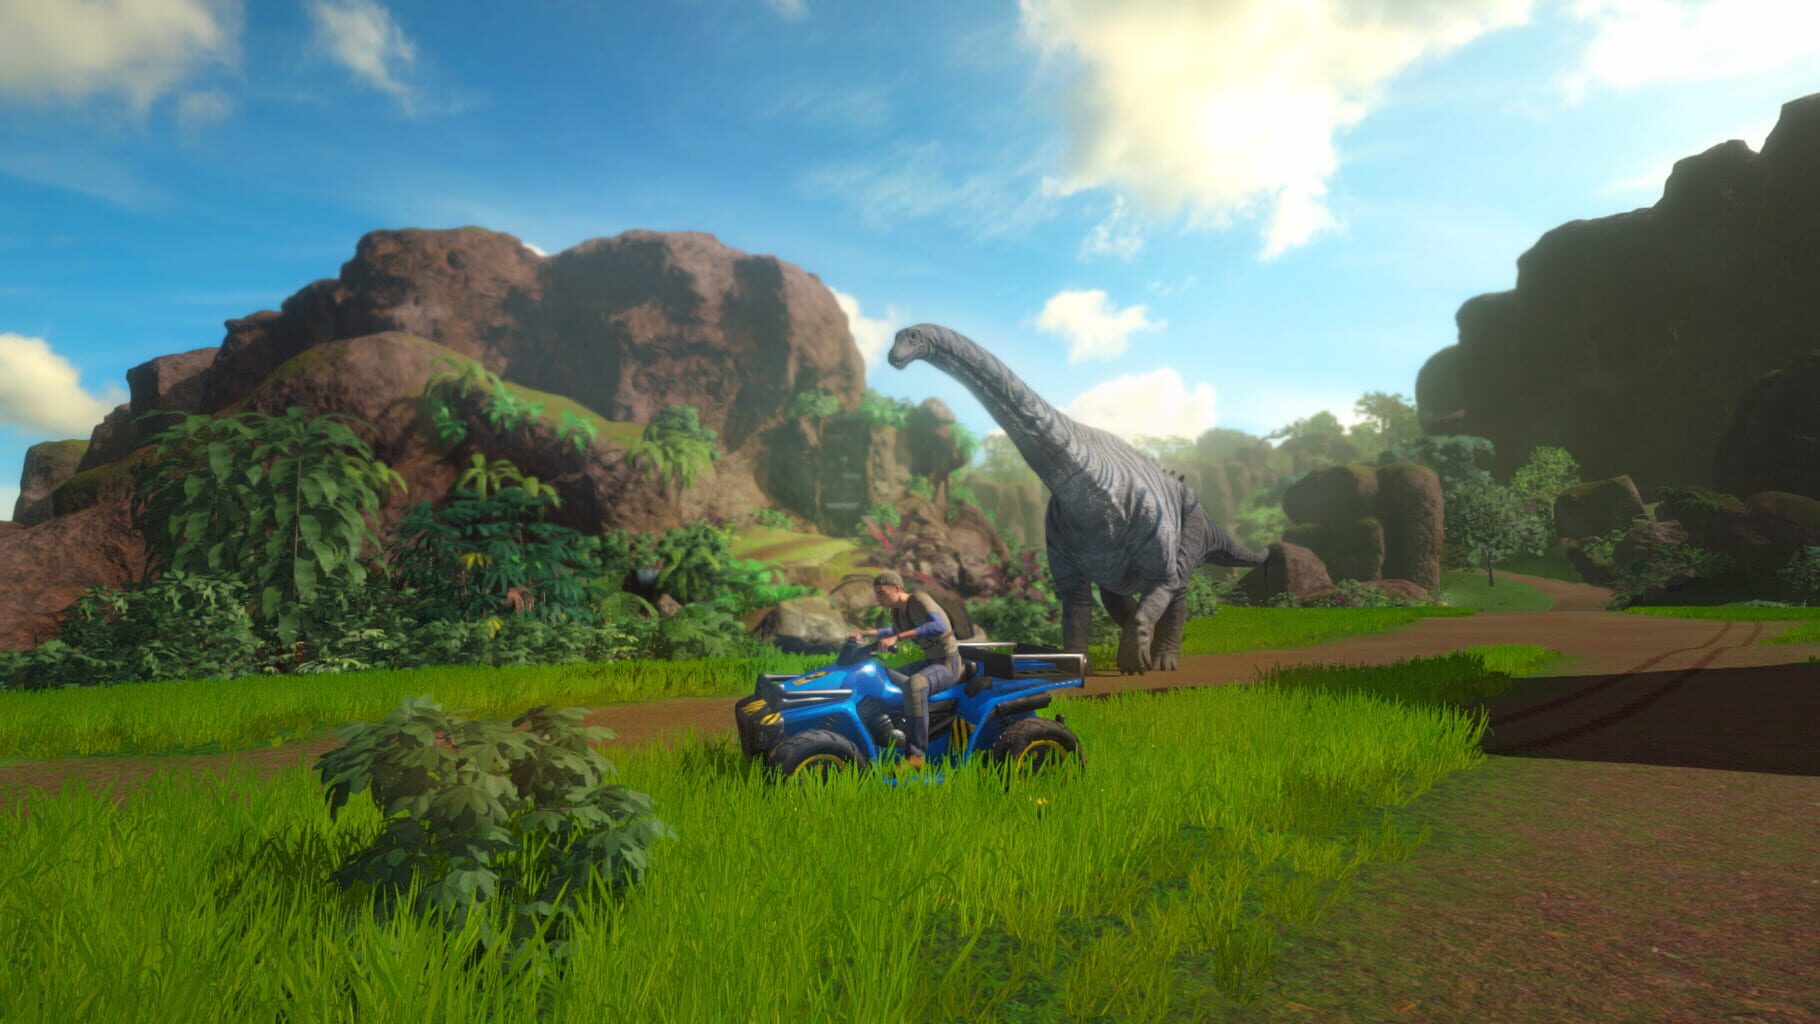 Captura de pantalla - Dinosaurs: Mission Dino Camp